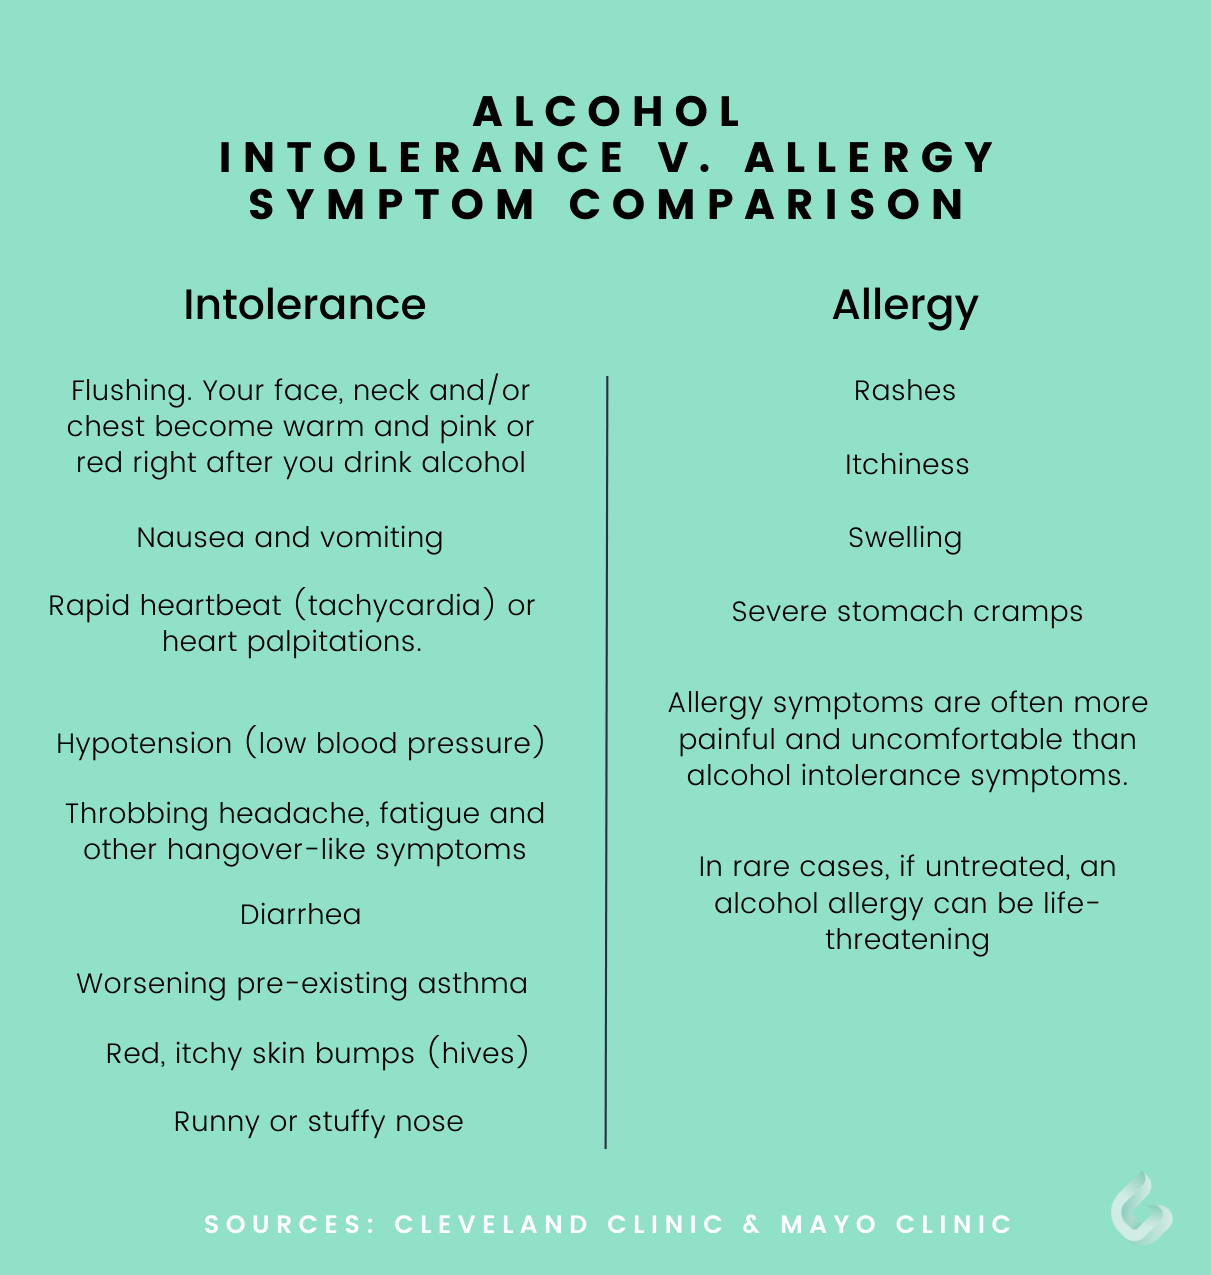 symptoms of an alcohol intolerance versus an allergy